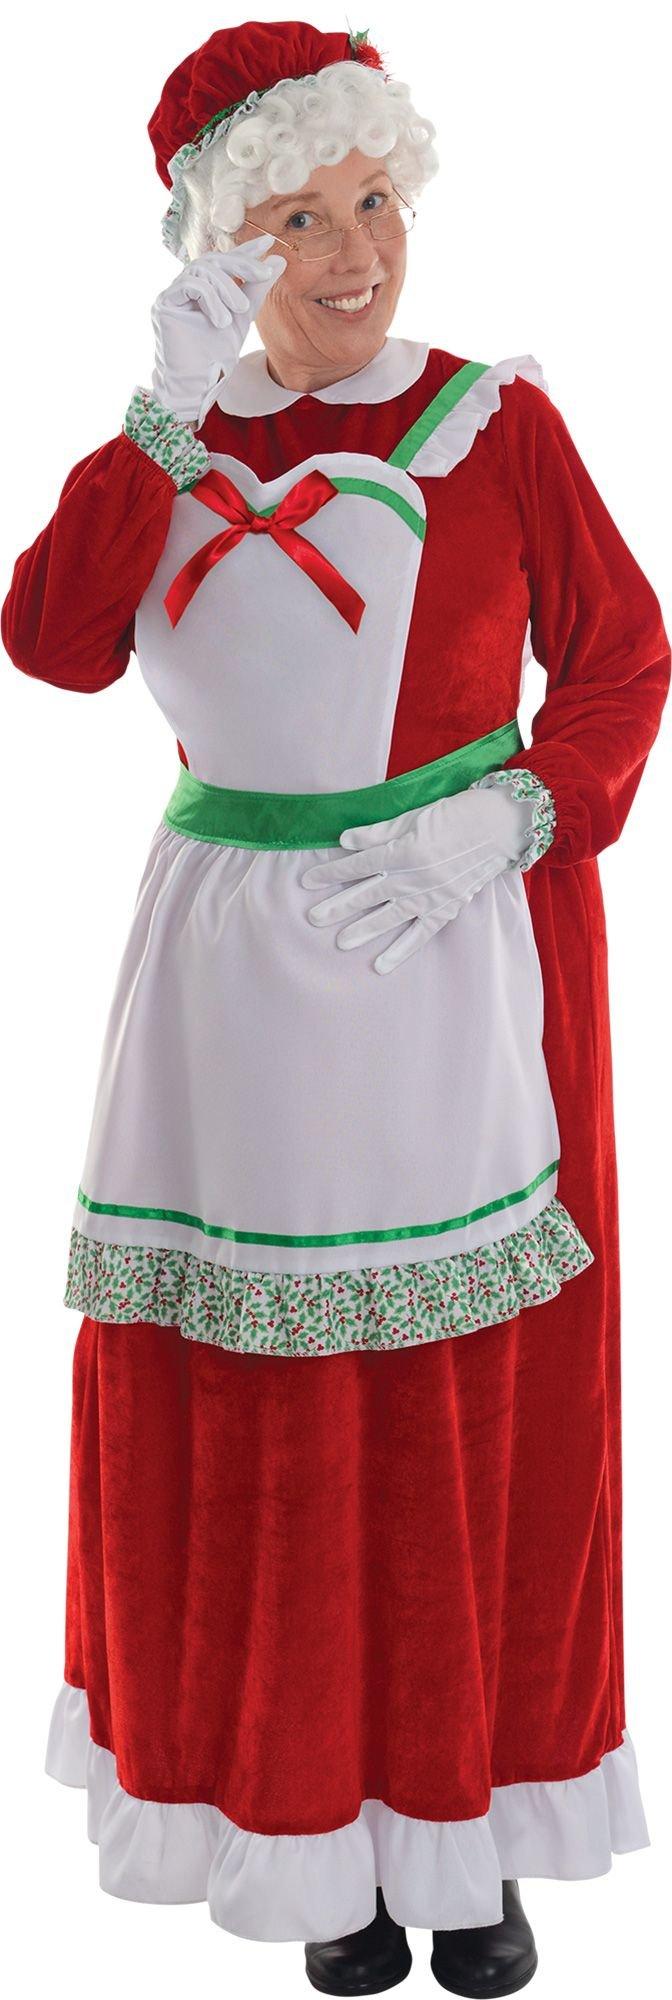 Adult Mrs. Santa Claus Costume Plus Size